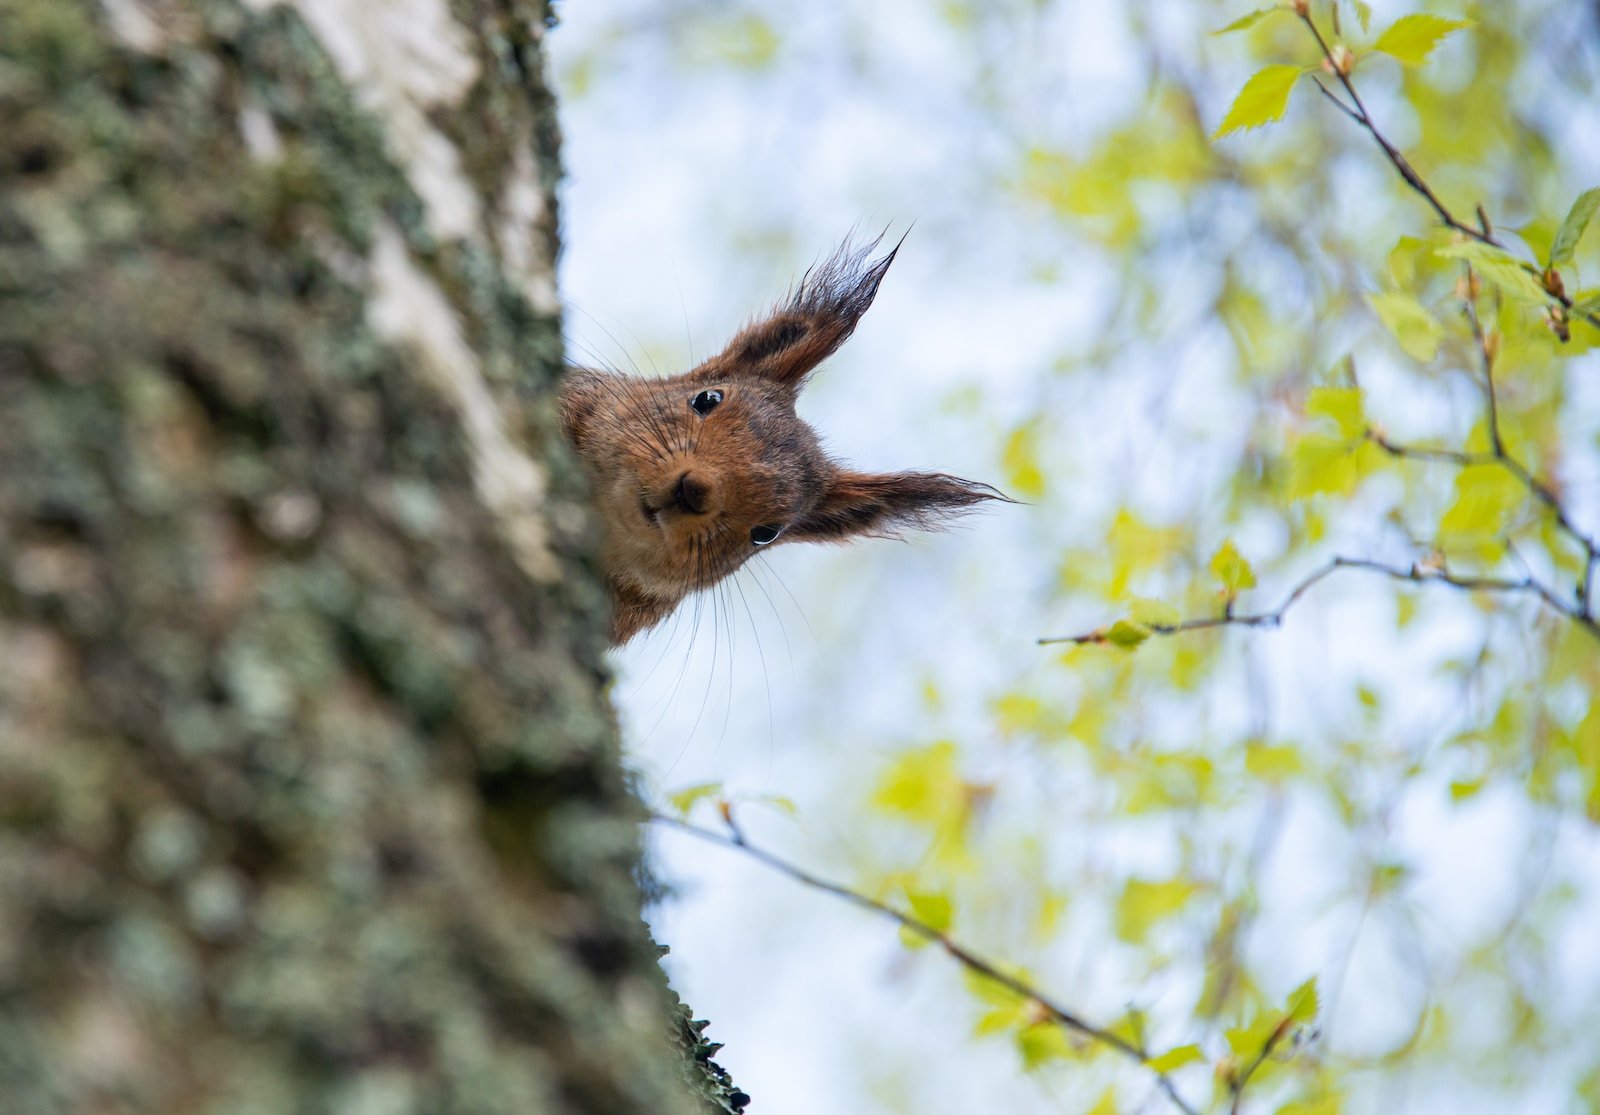 brown squirrel on tree branch during daytime, Curiosity